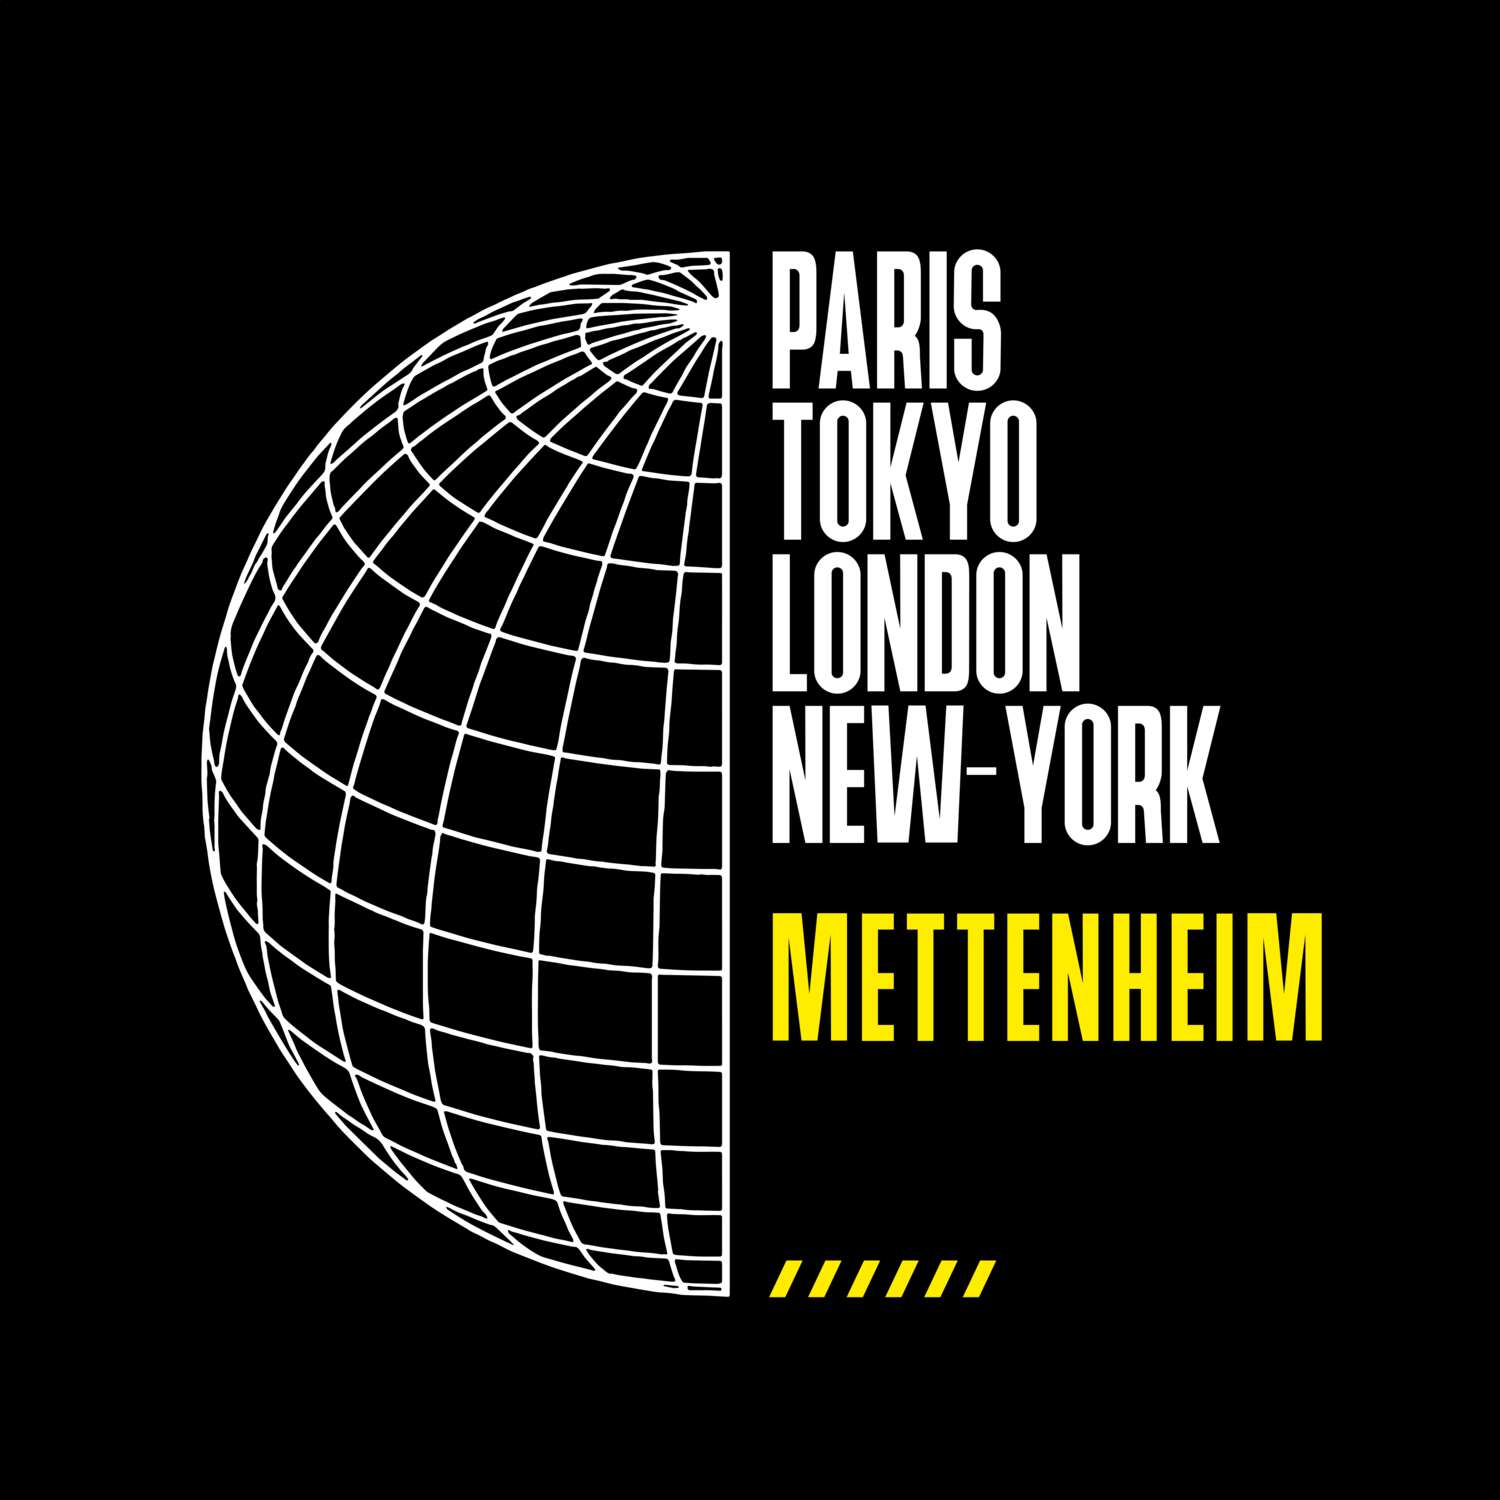 Mettenheim T-Shirt »Paris Tokyo London«